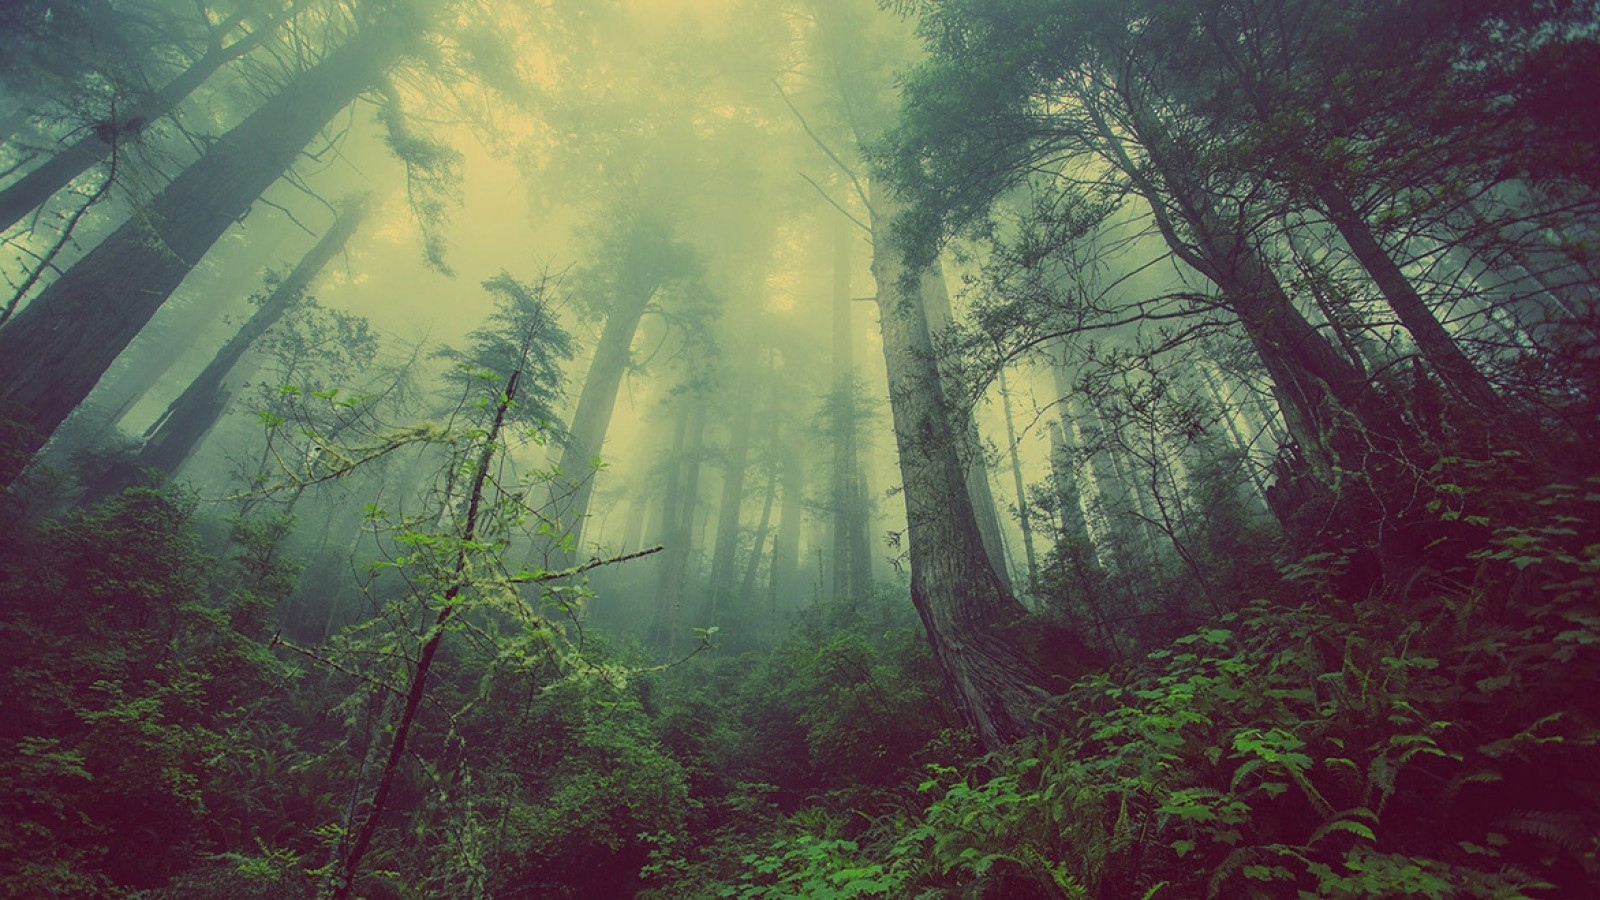 “El clamor de los bosques”, de Richard Powers